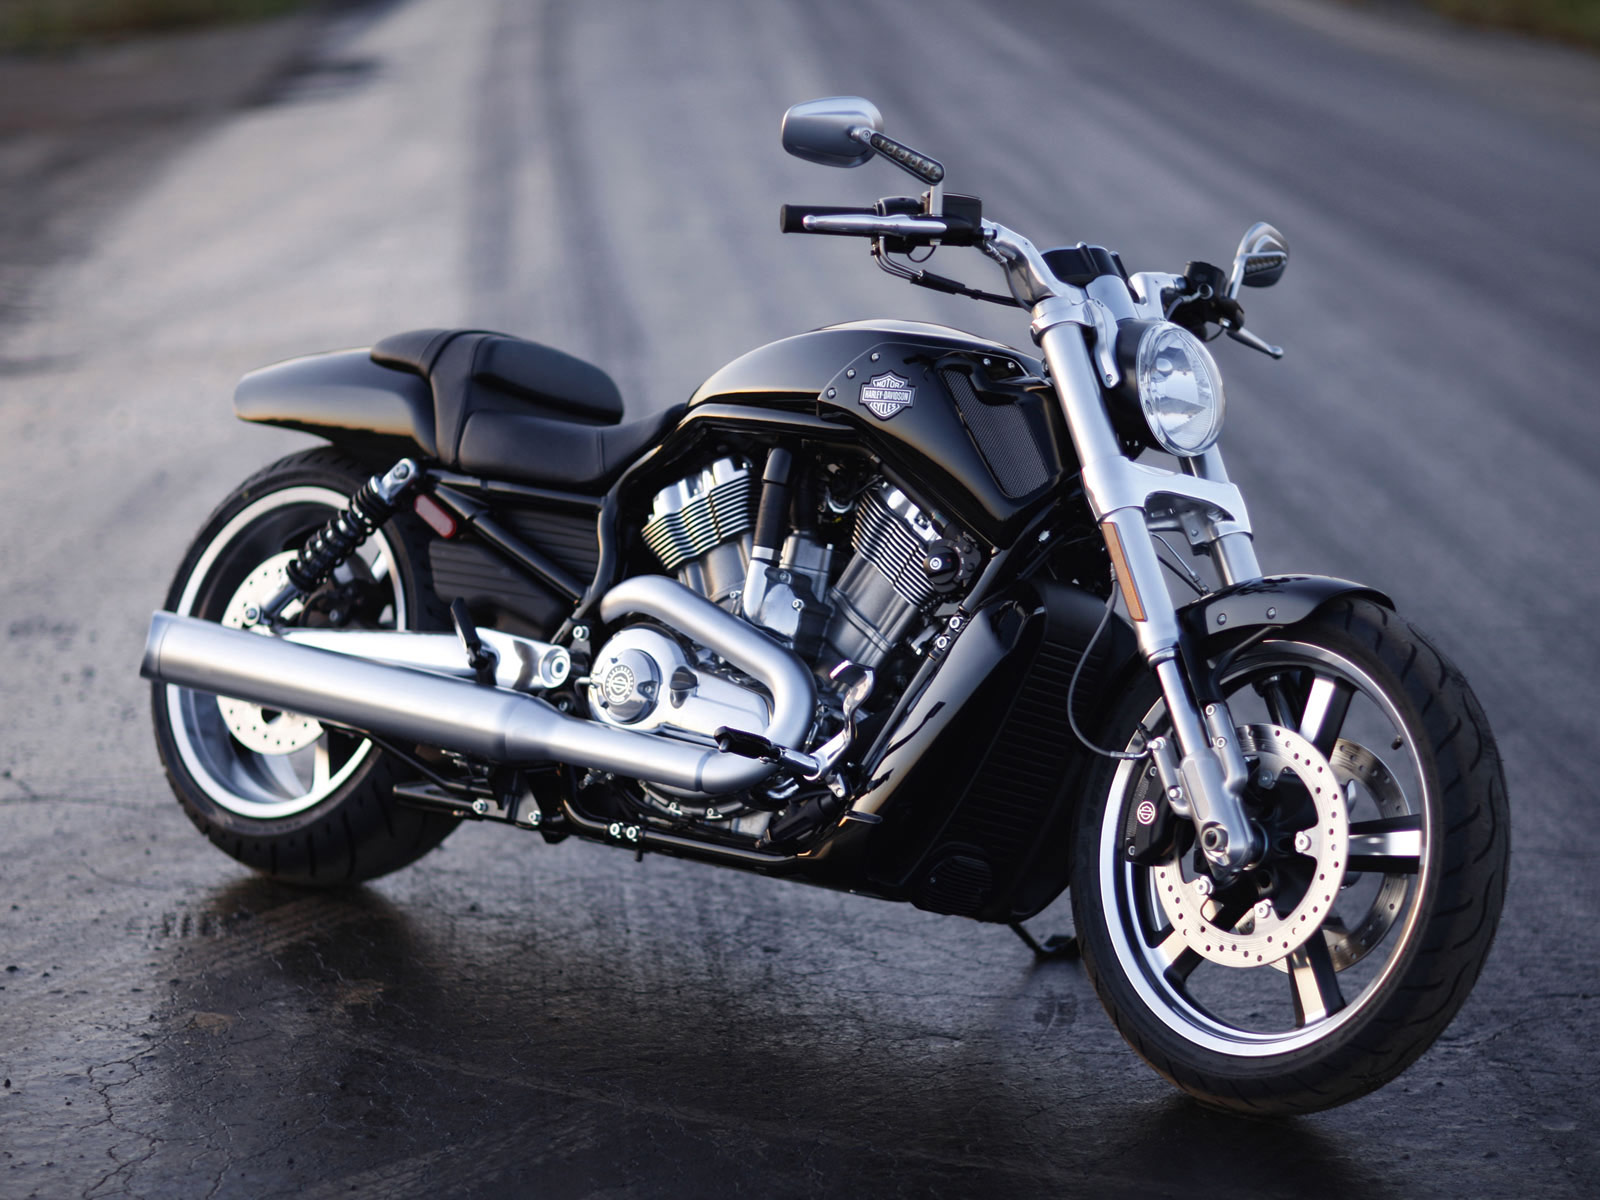 New Harley Davidson Wallpaper Motorcycle